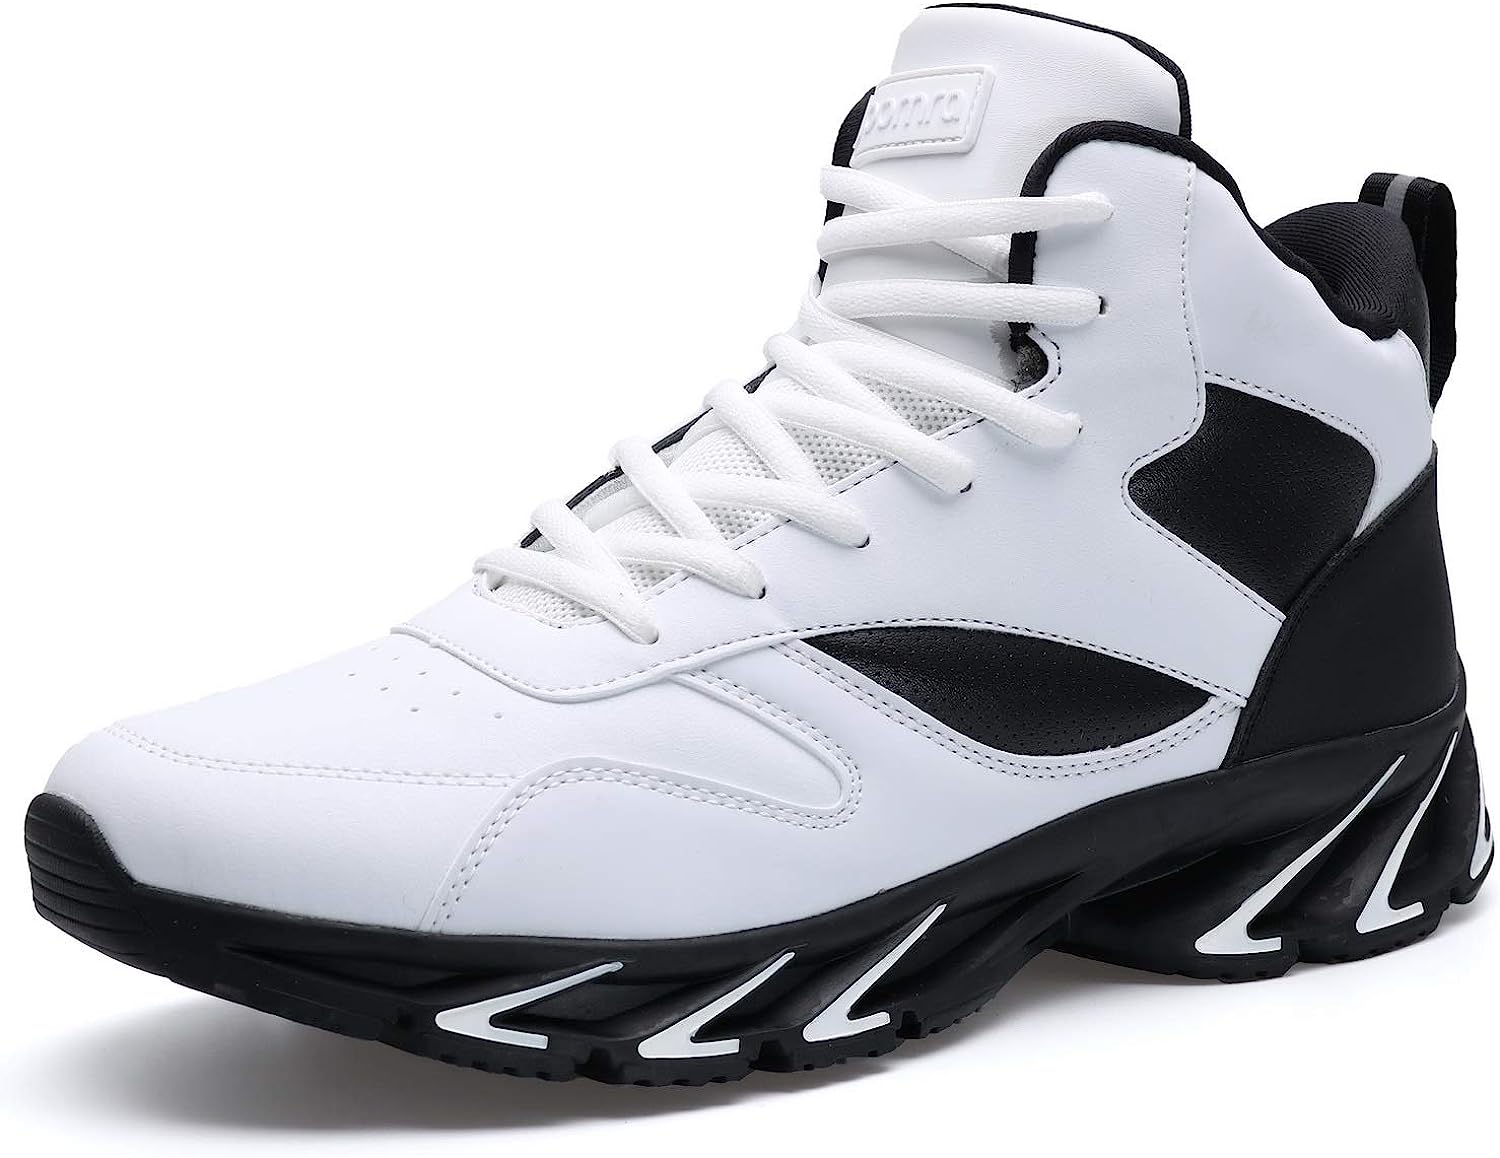 Joomra Men's Stylish Sneakers High Top Athletic- [...]